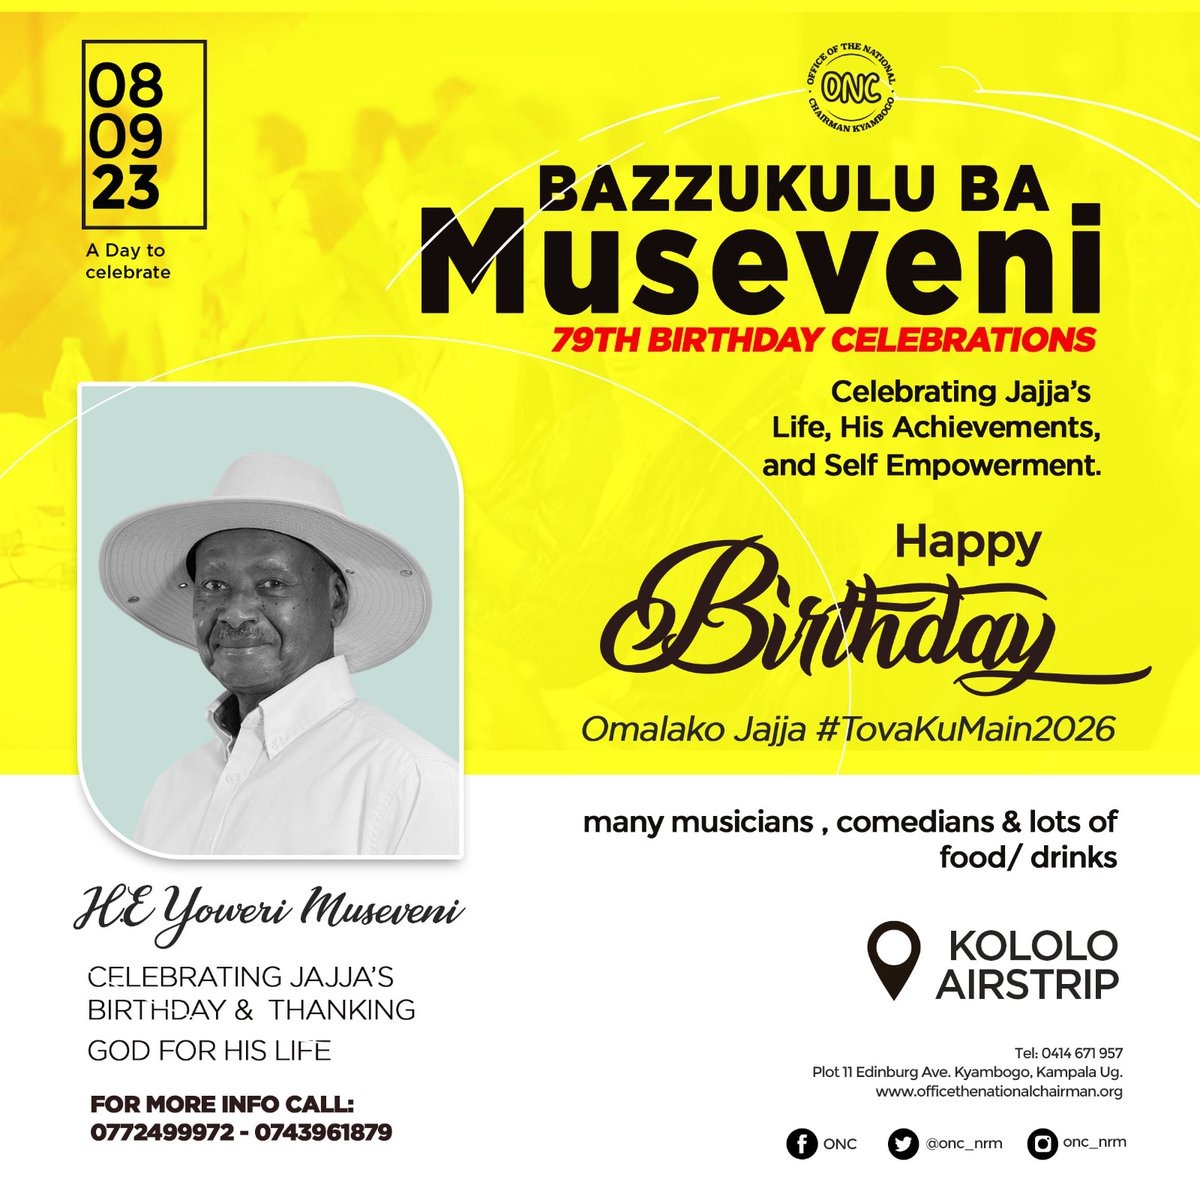 Bazzukulu To Throw Mega Party For President Museveni’s 79th Birthday